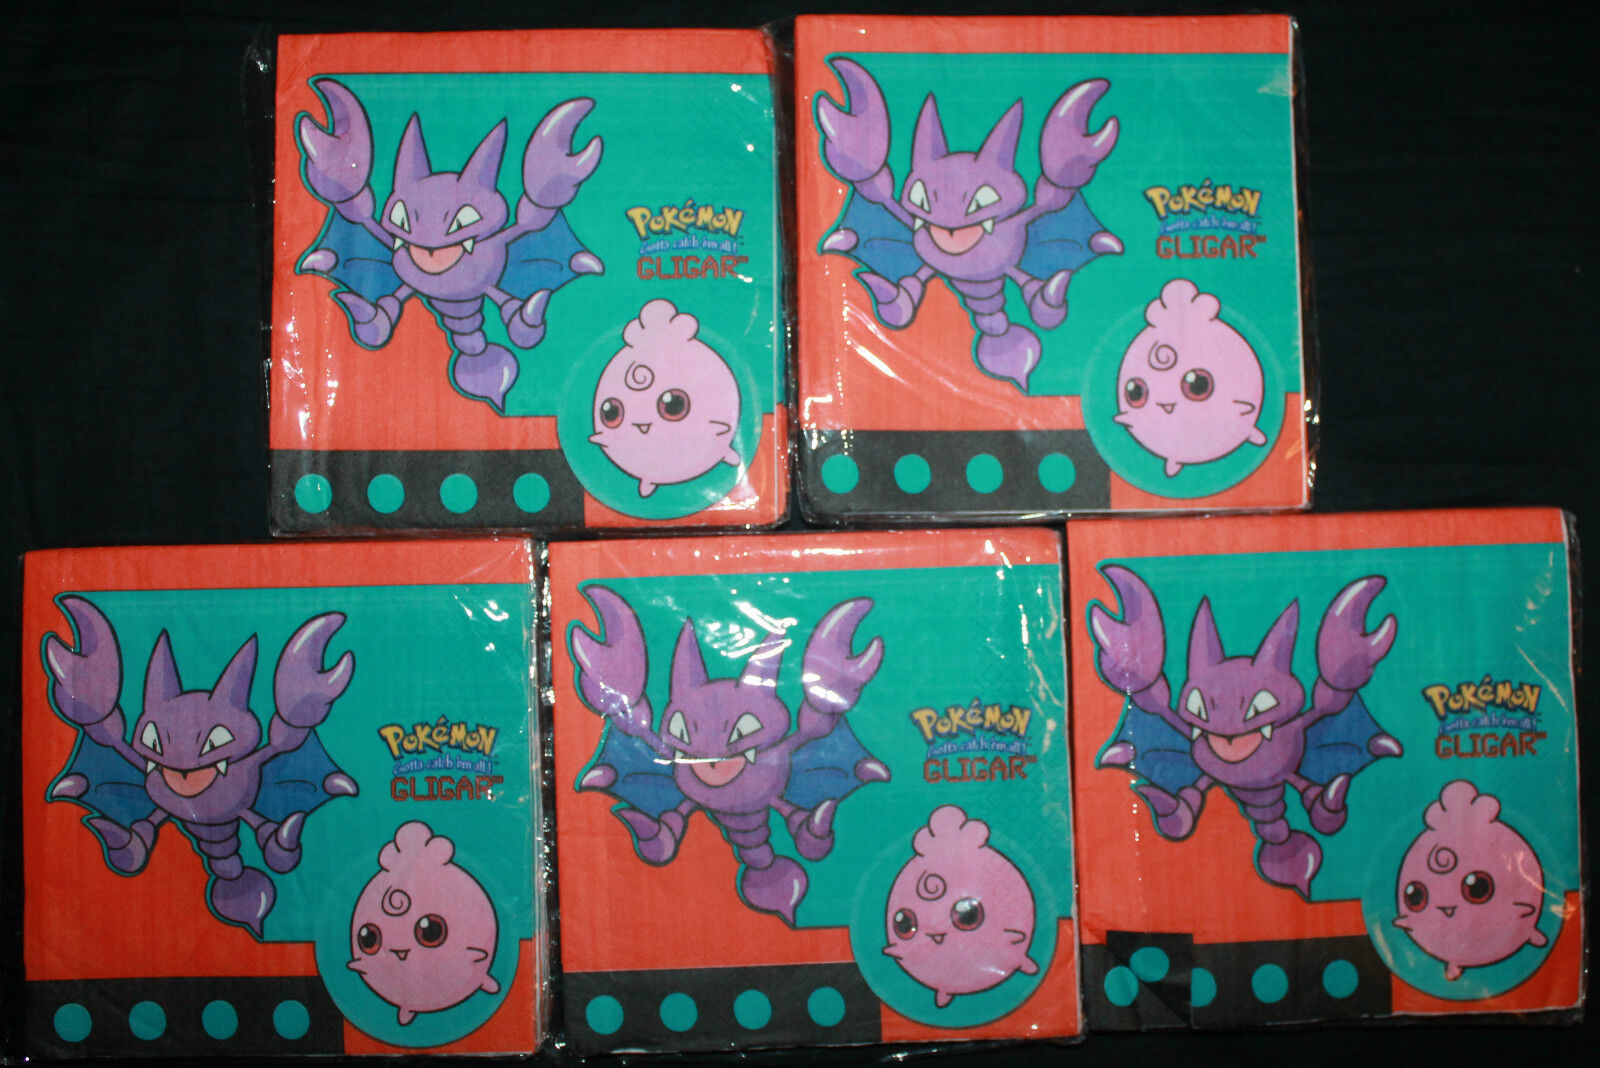 5 x Pokemon Gligar 16 Napkin Party Supplies 80 DesignWare 3 Ply Napkins Total - $28.22